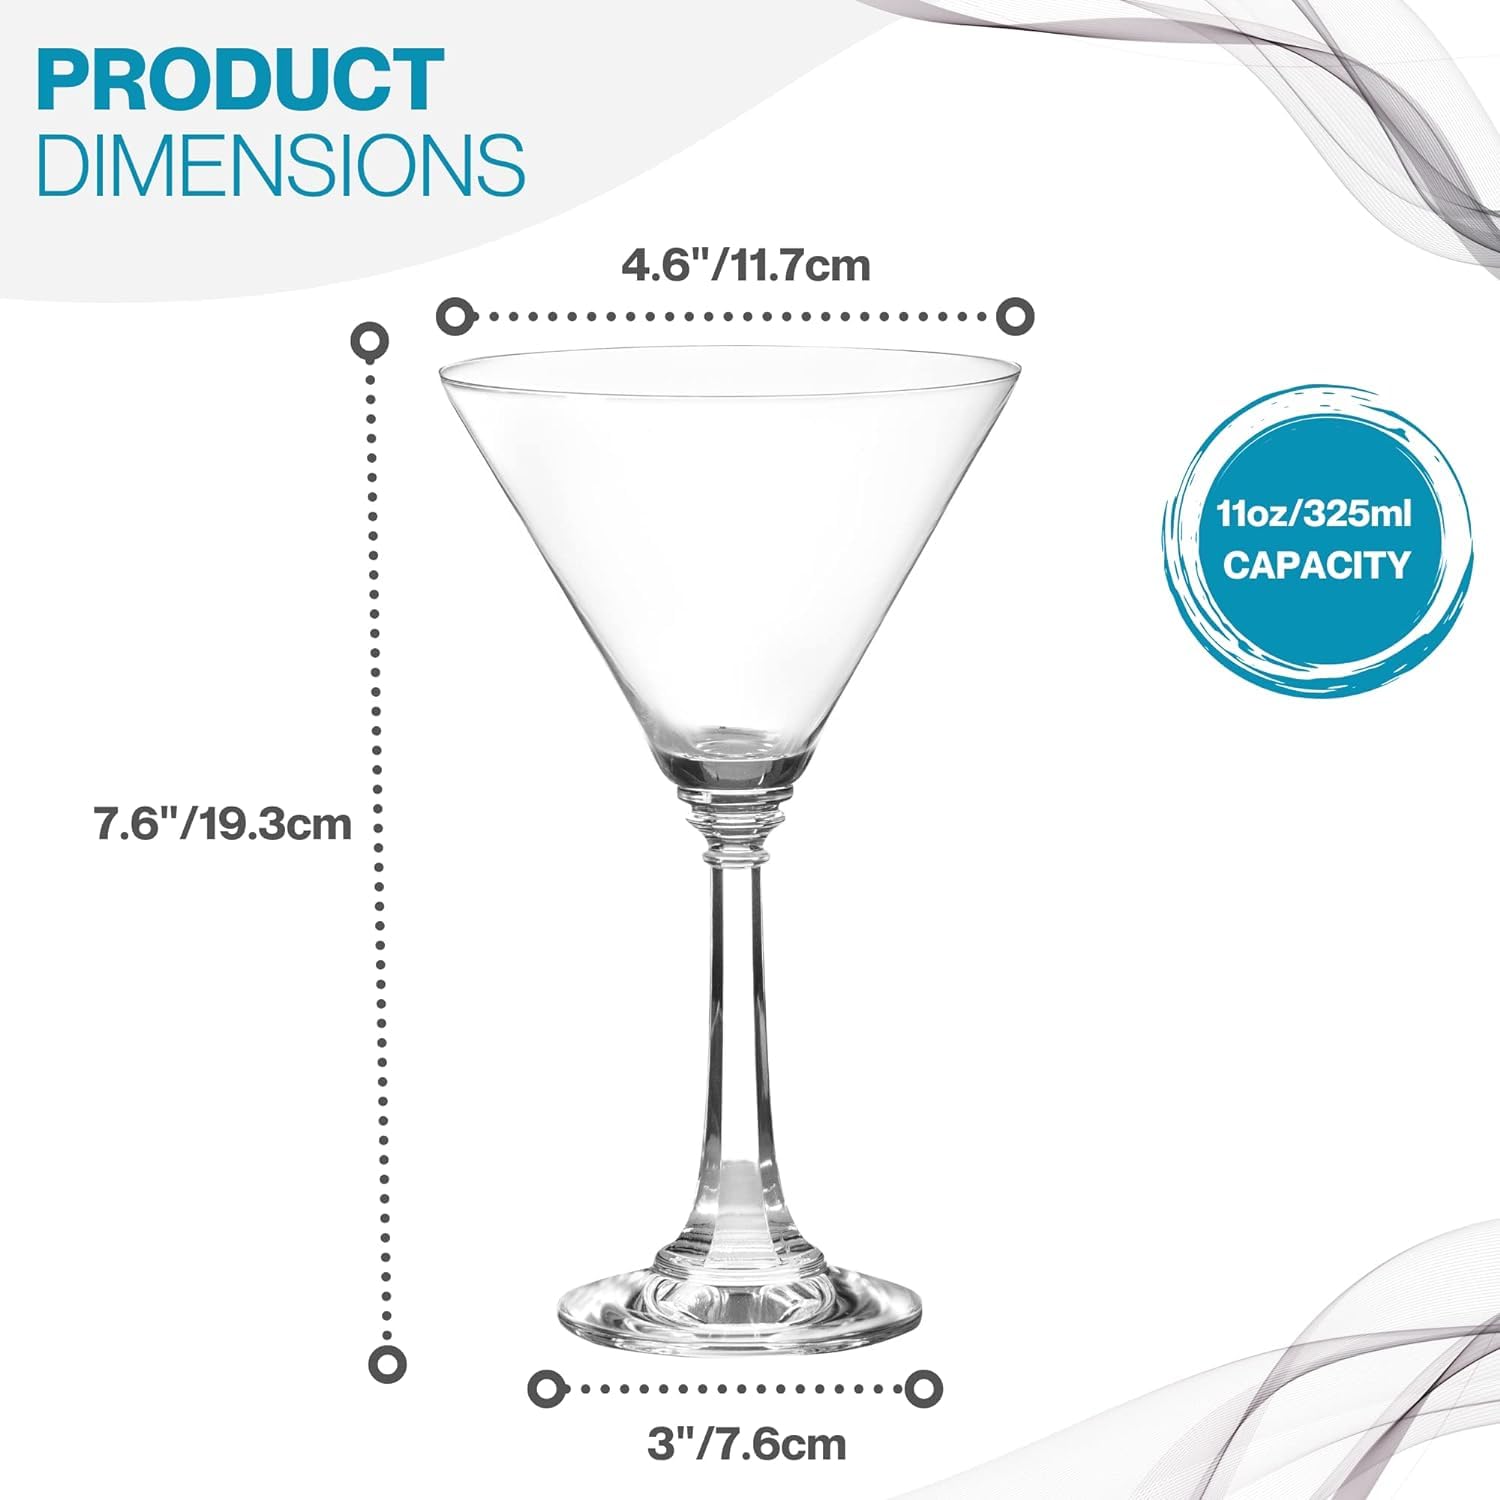 BENETI Tall Martini Glasses Set of 4 | Made in Europe | 11oz Long Stem Crystal Cocktail Bar Glasses  - Like New